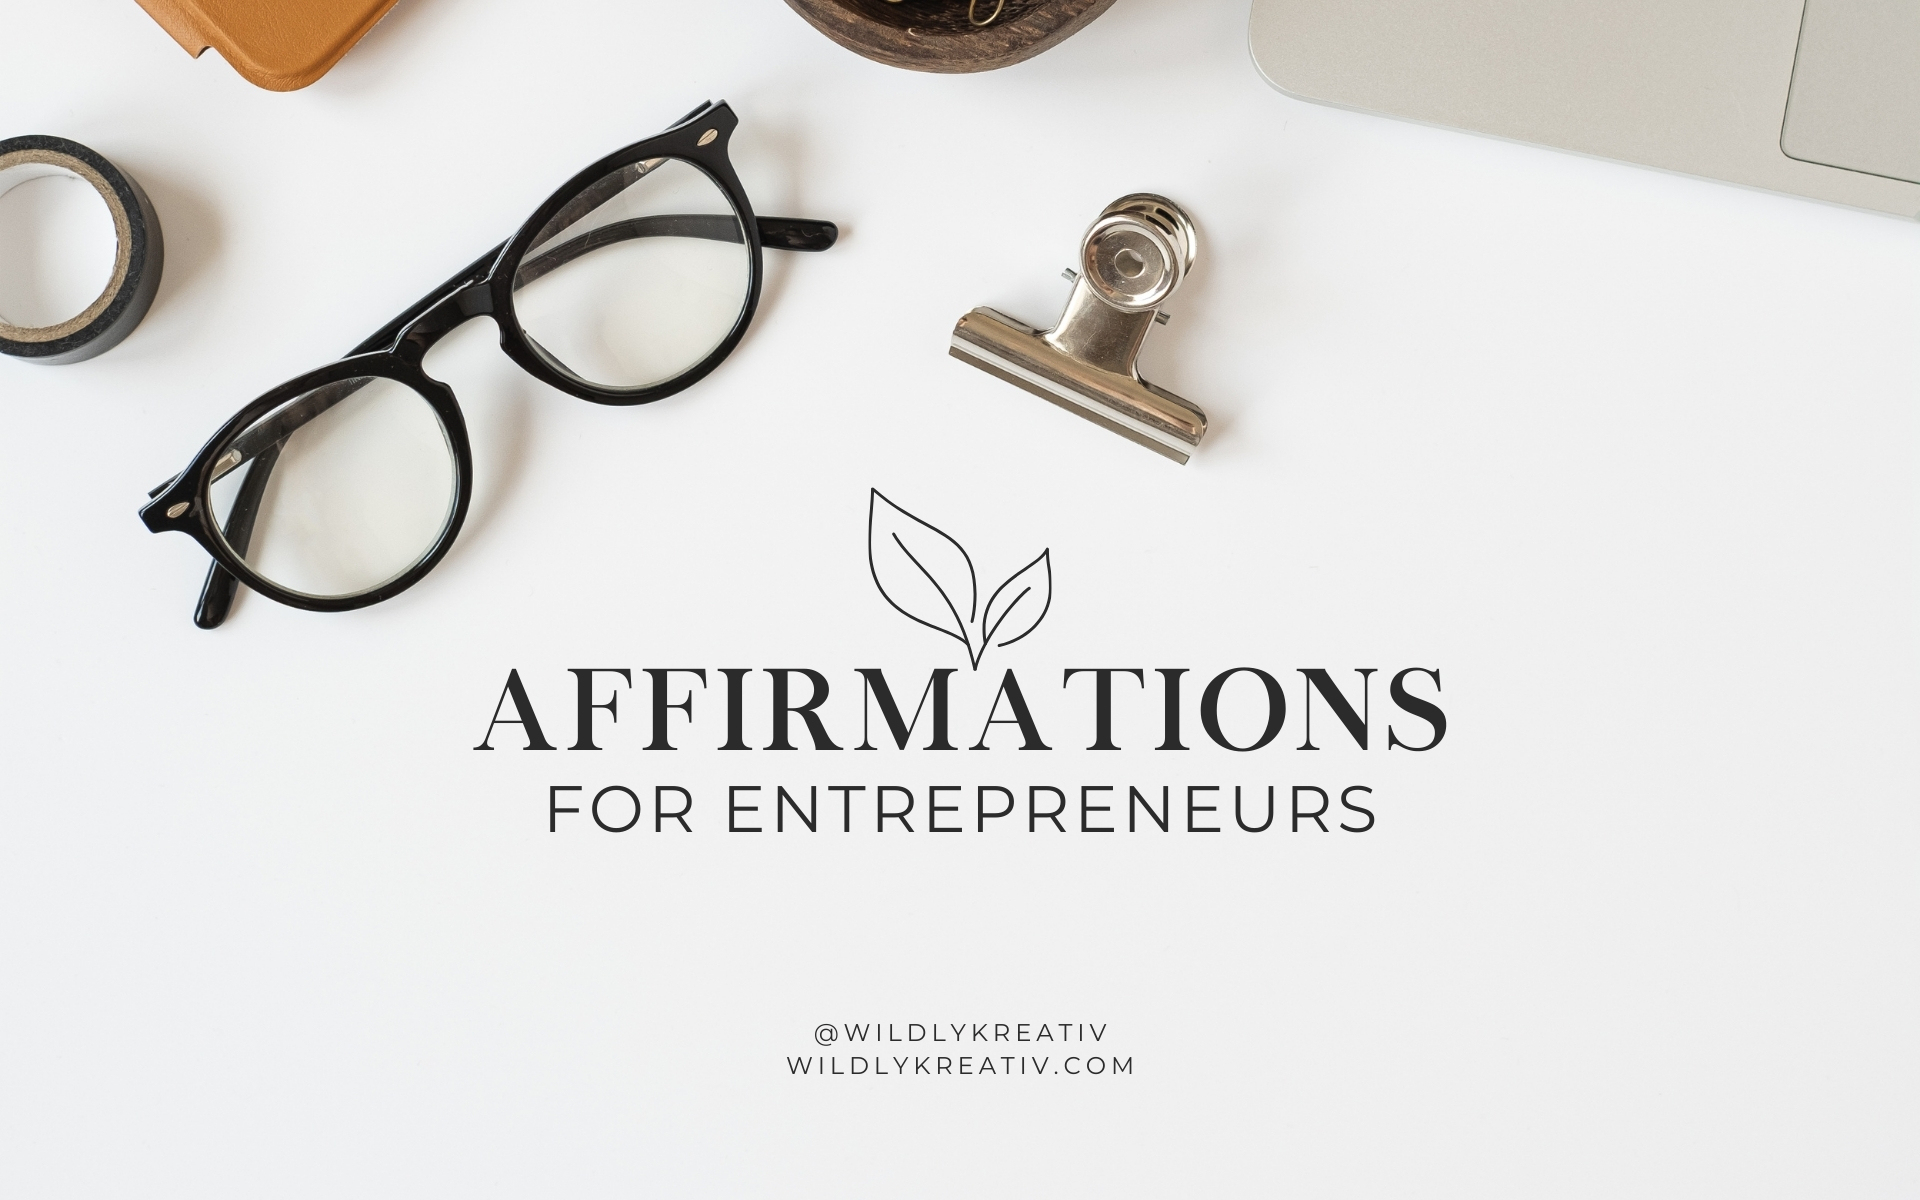 Affirmations for entrepreneurs